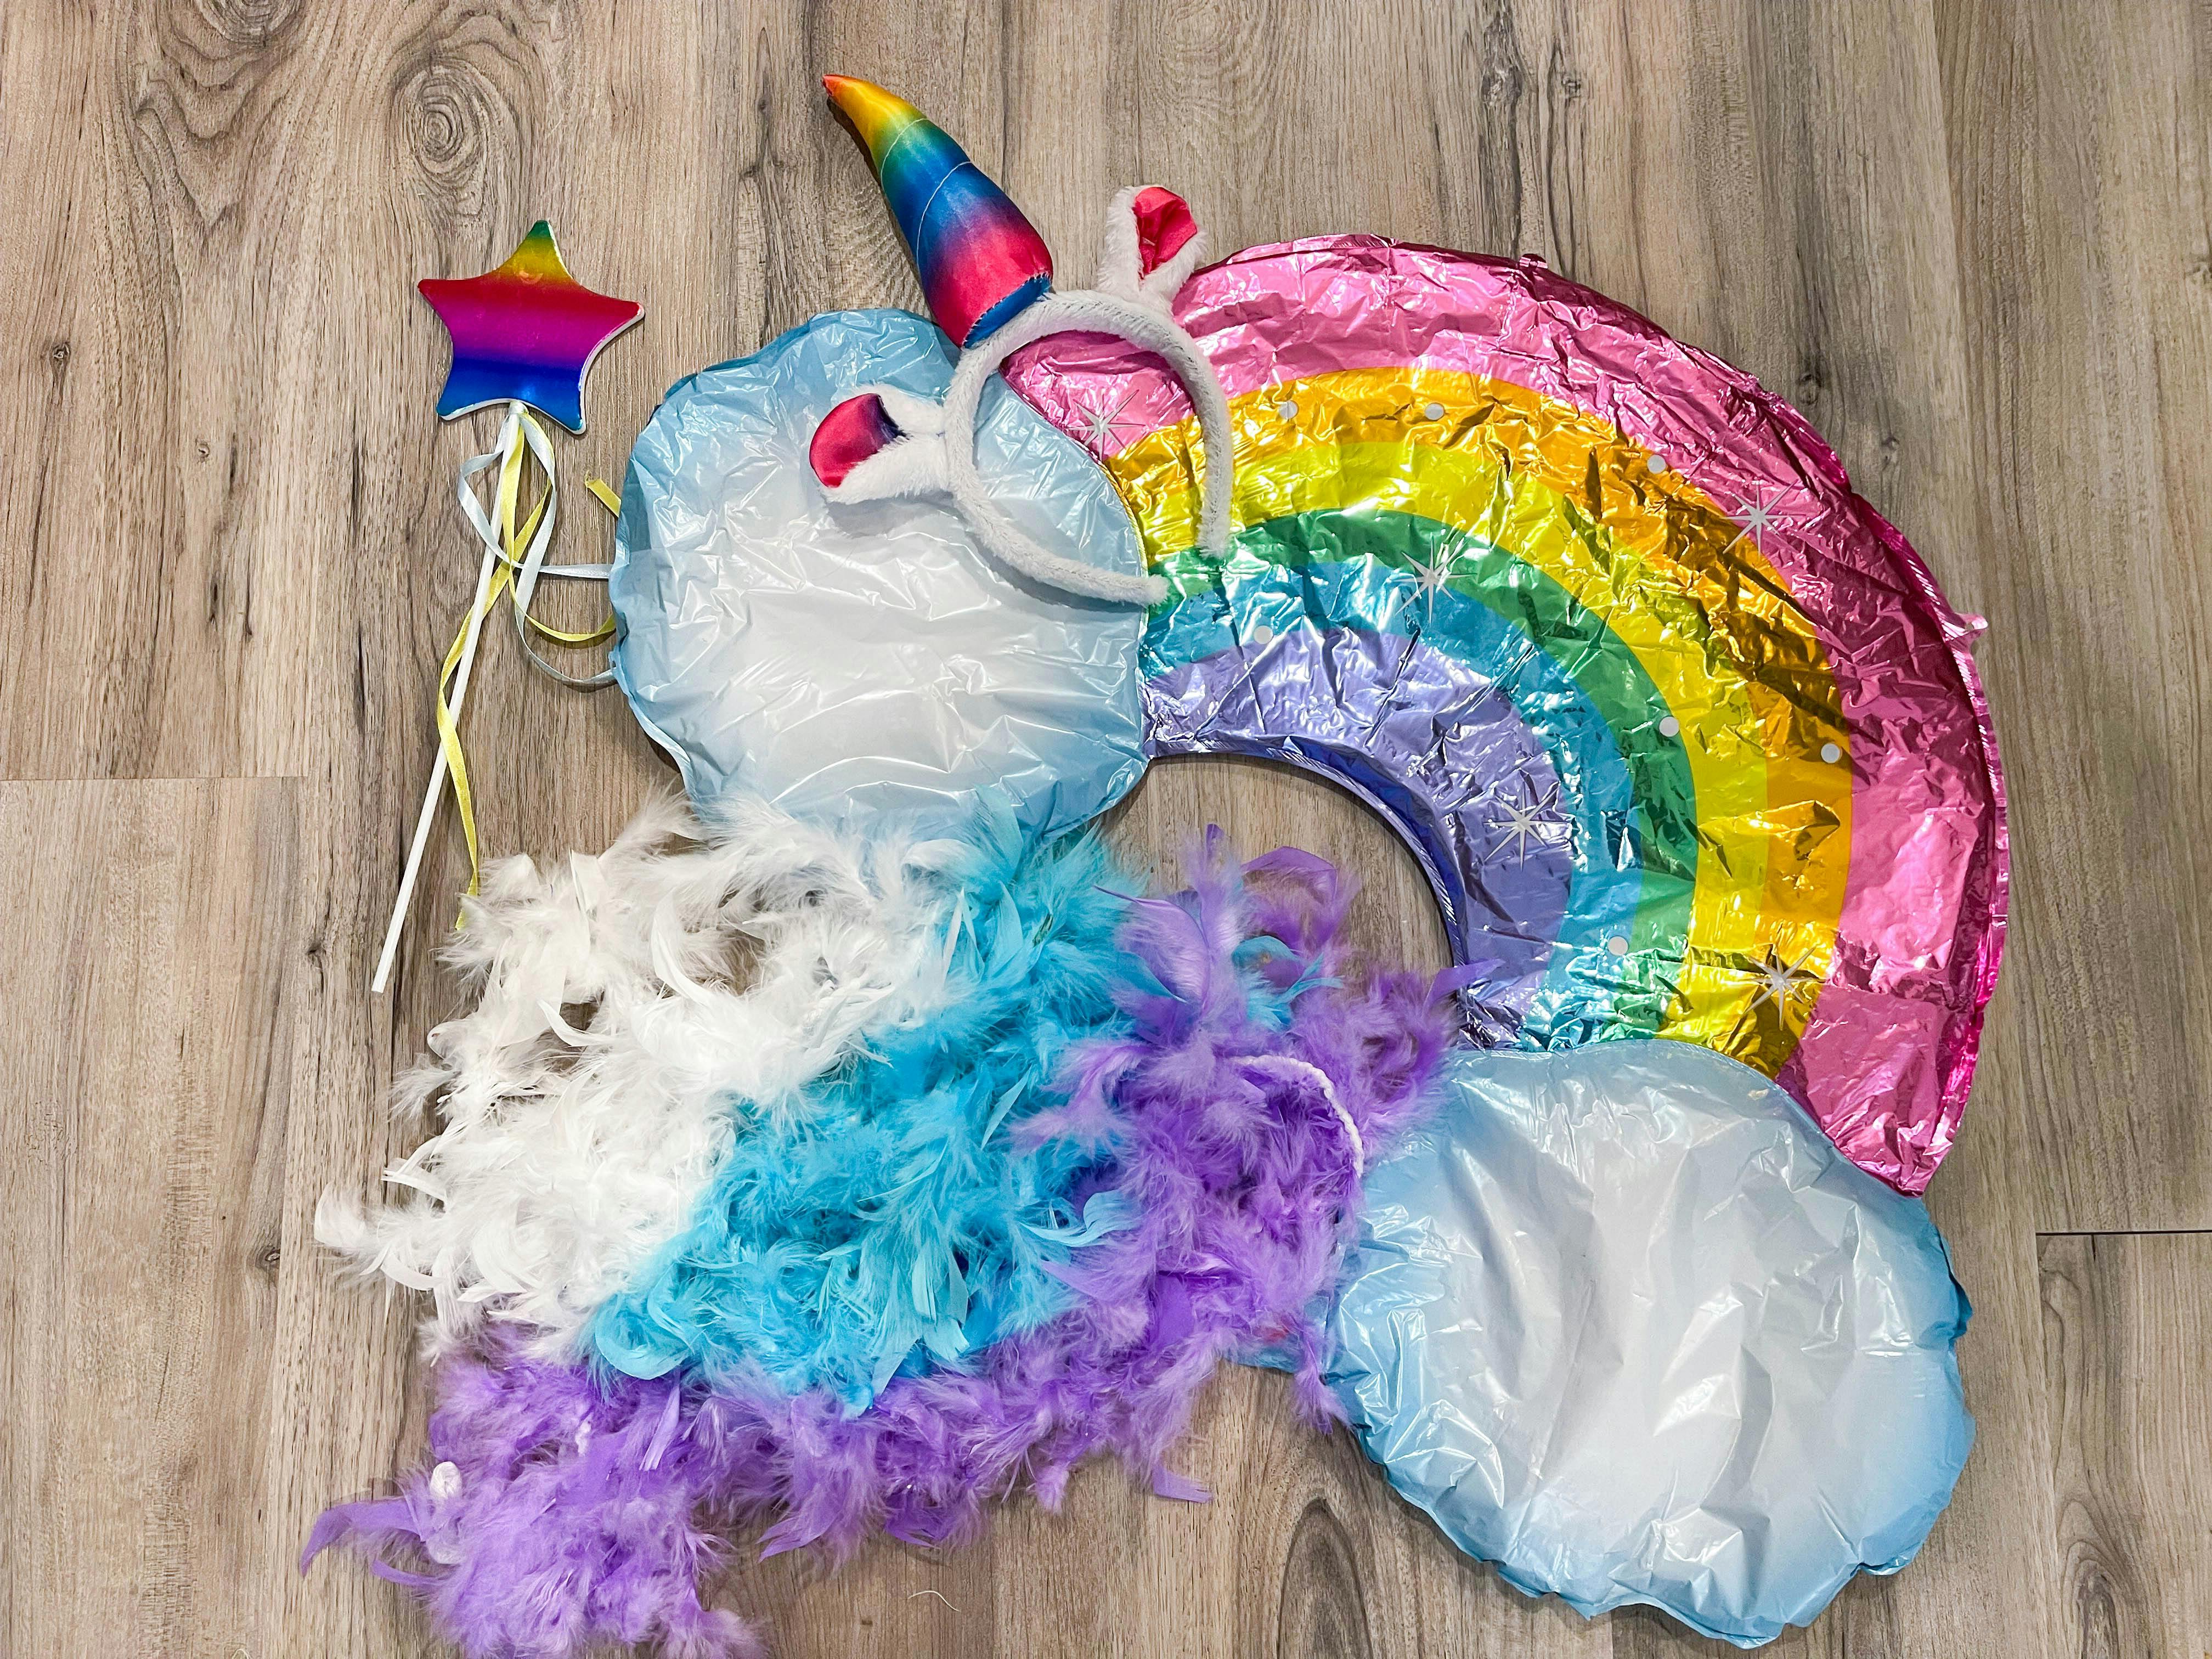 unicorn rainbow costume pieces piled together